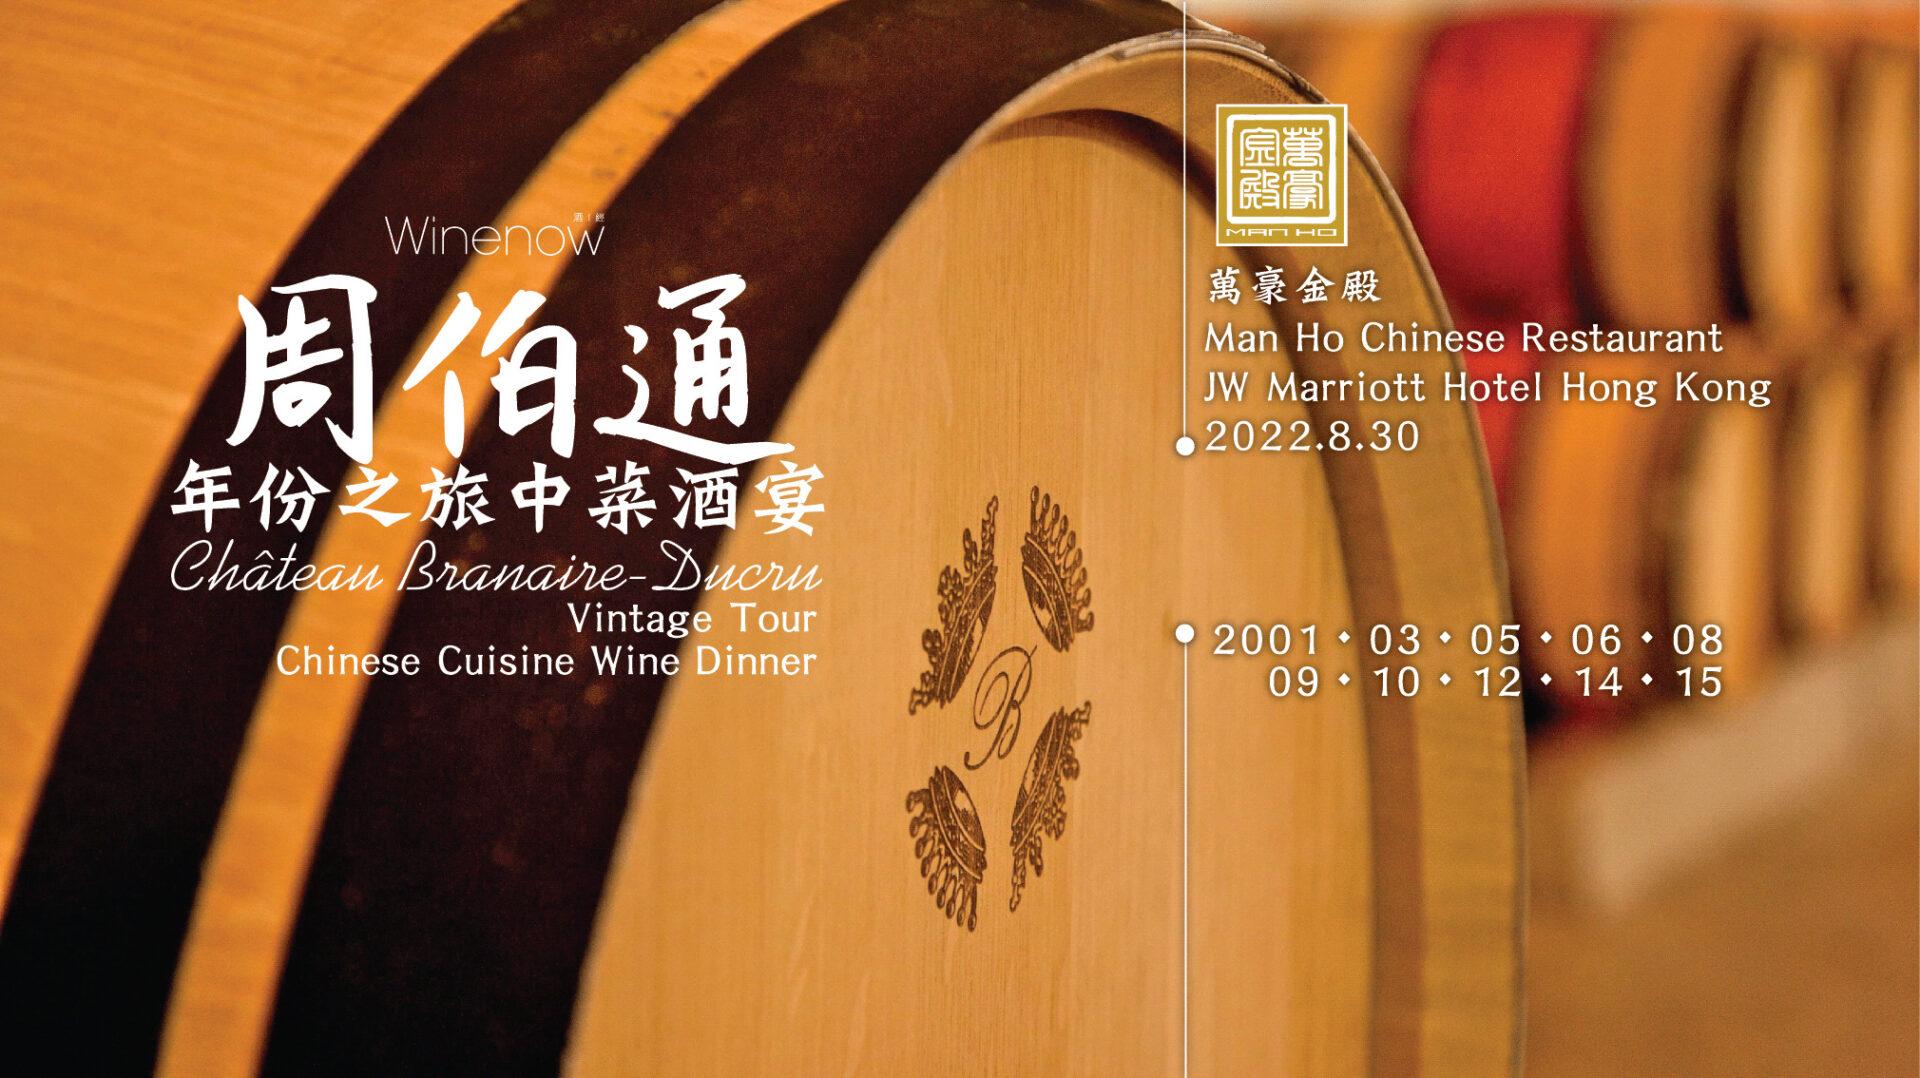 【full】周伯通年份之旅中菜酒宴 Château Branaire-Ducru Vintage Tour Chinese Cuisine Wine Dinner - WineNow